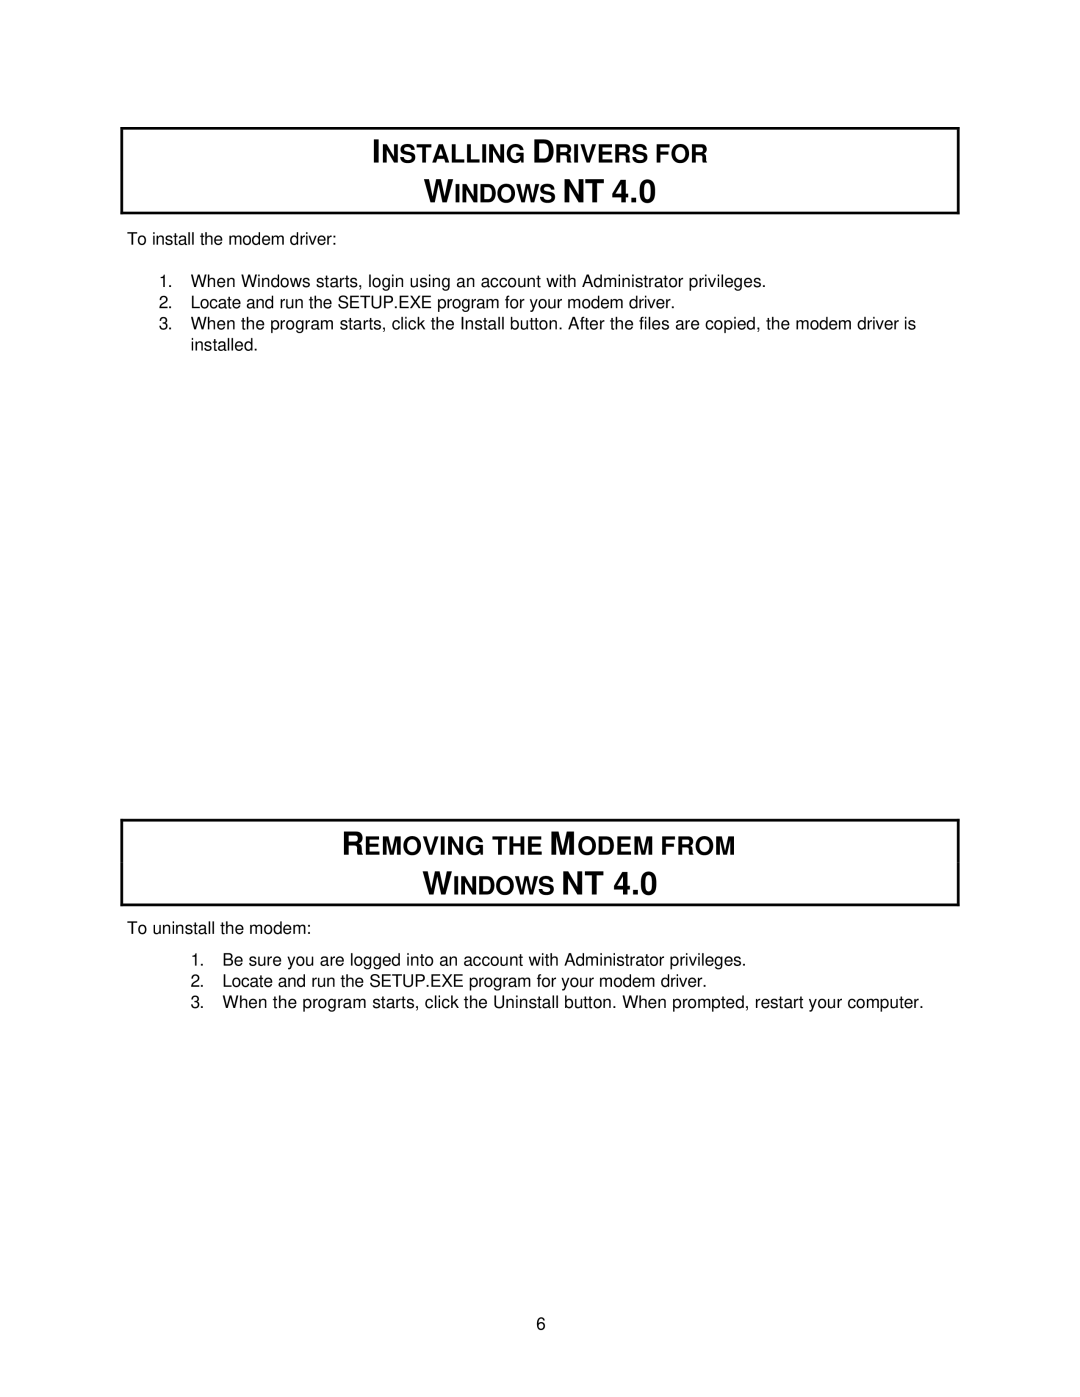 USRobotics 3Com manual Installing Drivers for, Removing the Modem from 